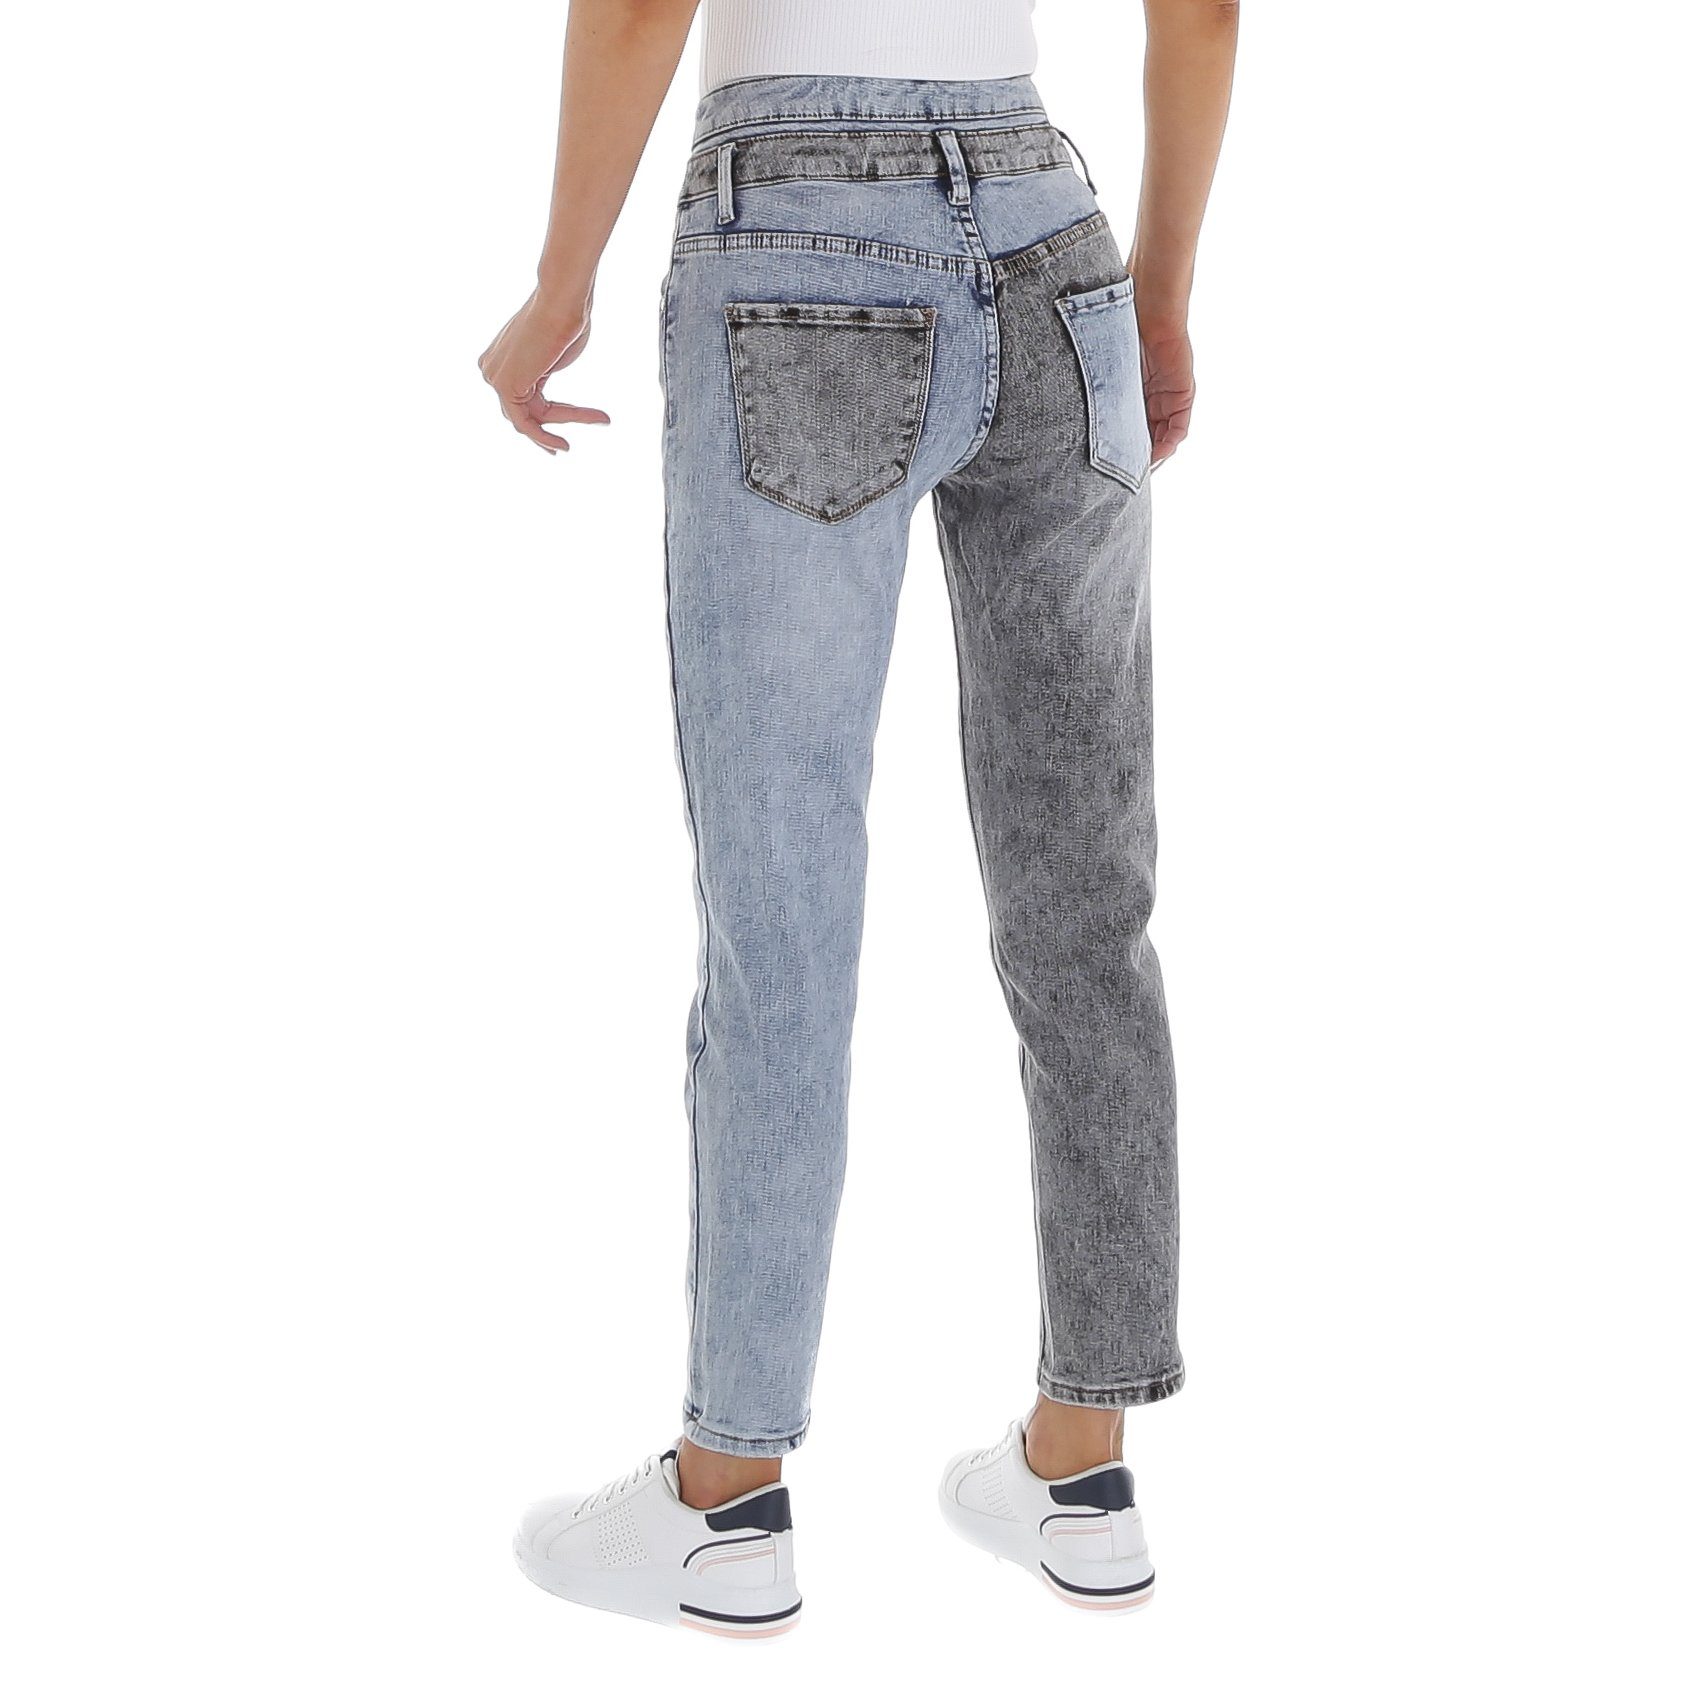 Damen Jeans Ital-Design High-waist-Jeans Damen Freizeit Used-Look Stretch High Waist Jeans in Grau